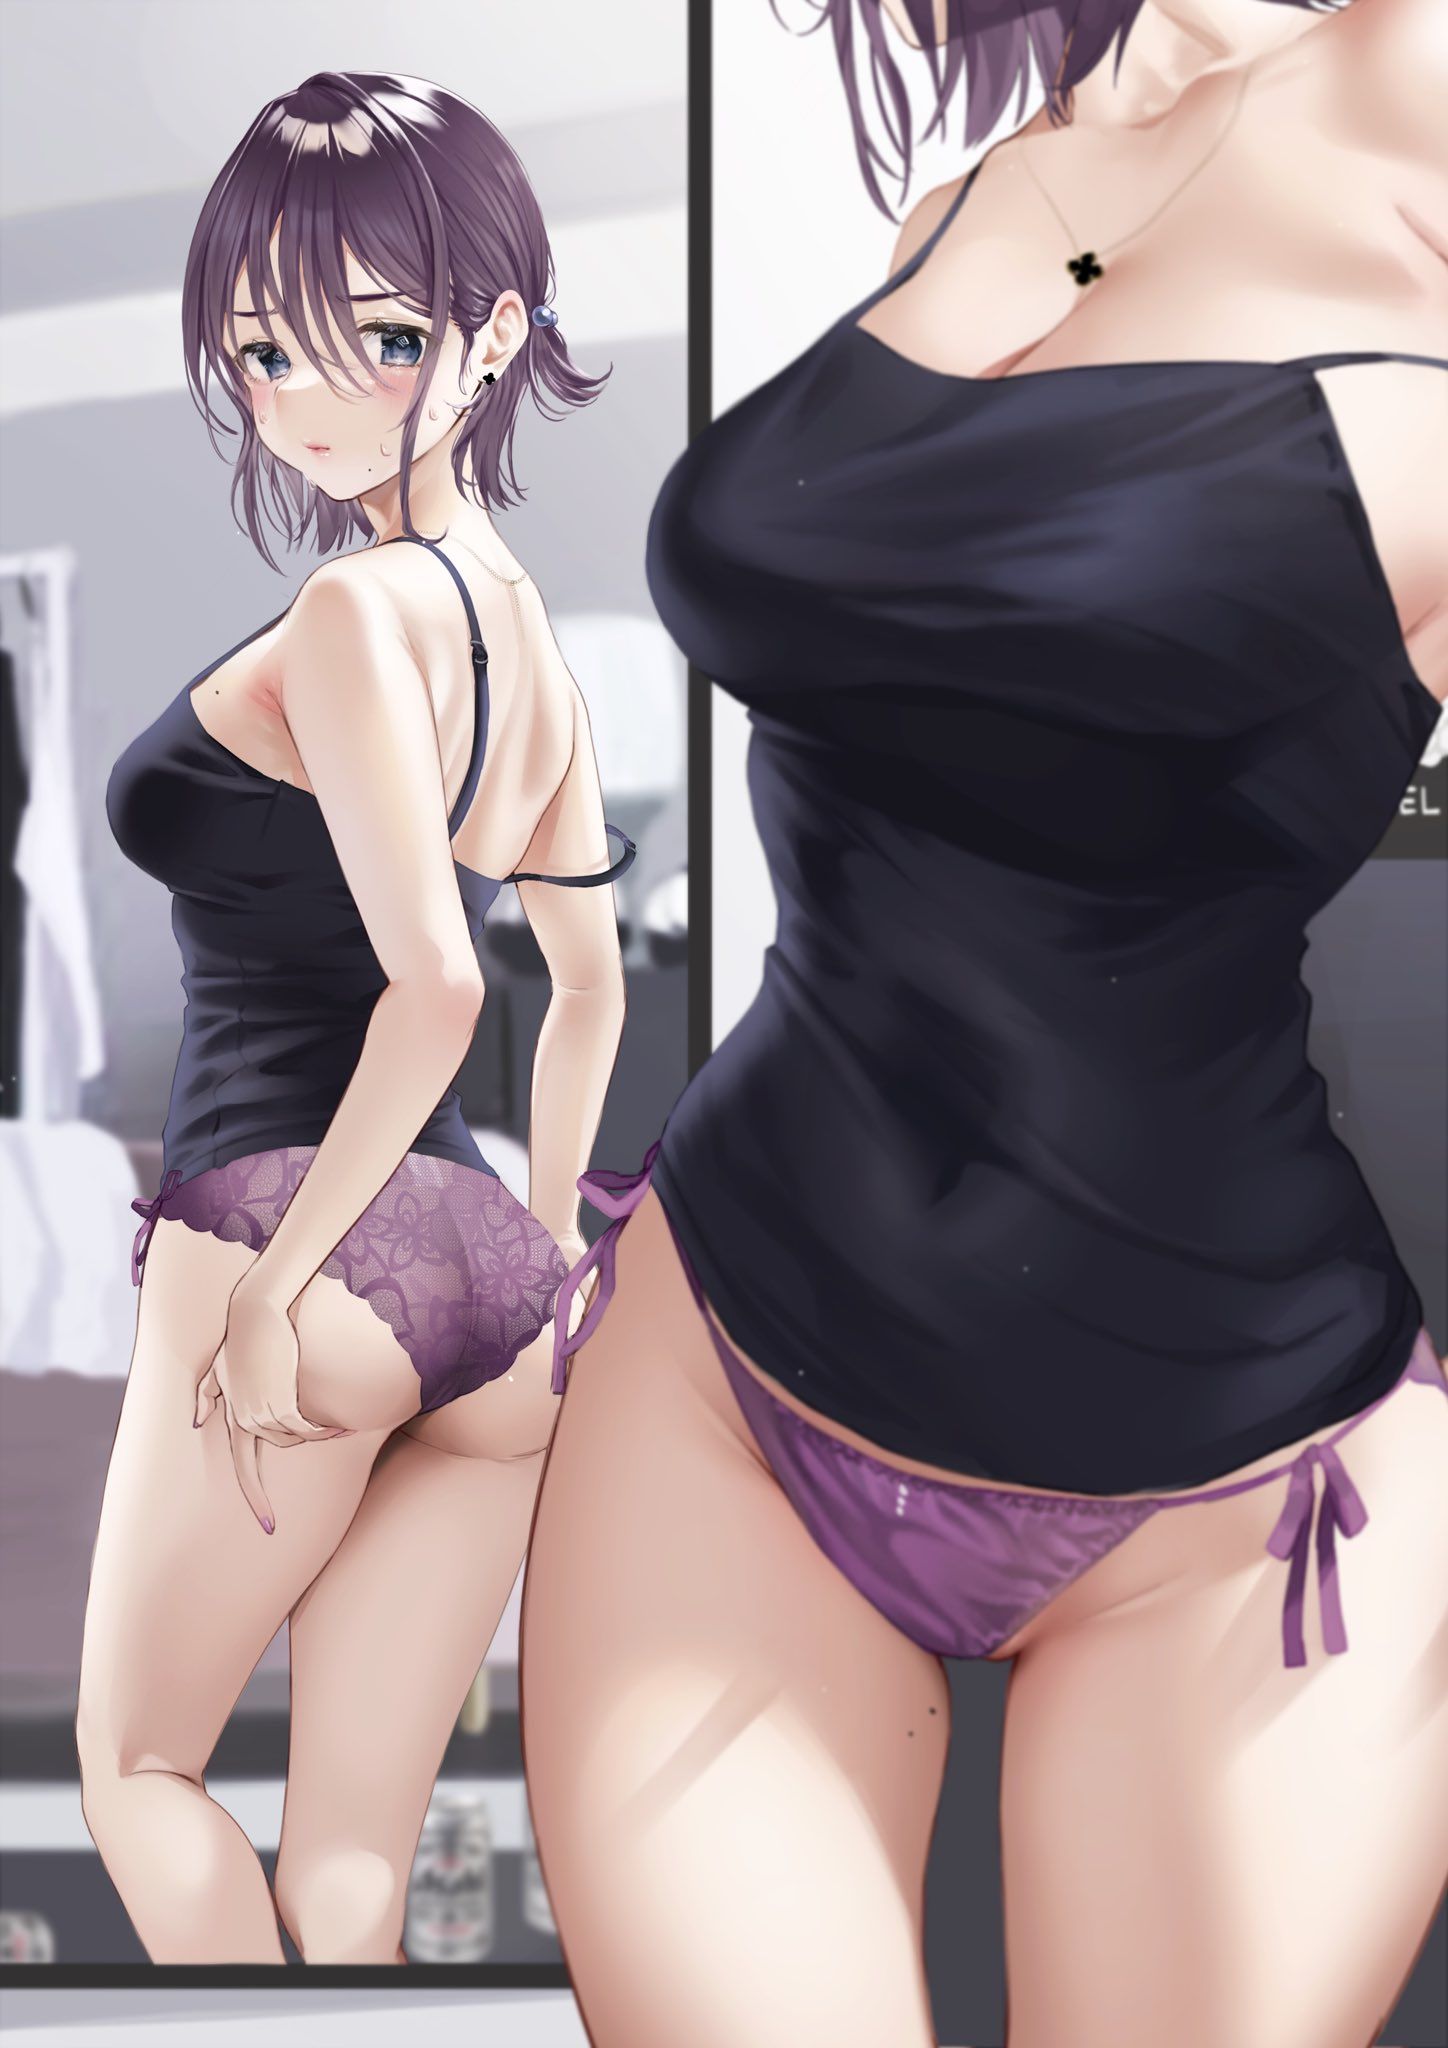 Anime 1448x2048 anime girls anime ass thighs curvy booty scoop panties camisole short hair reflection mirror artwork Poko (artist)